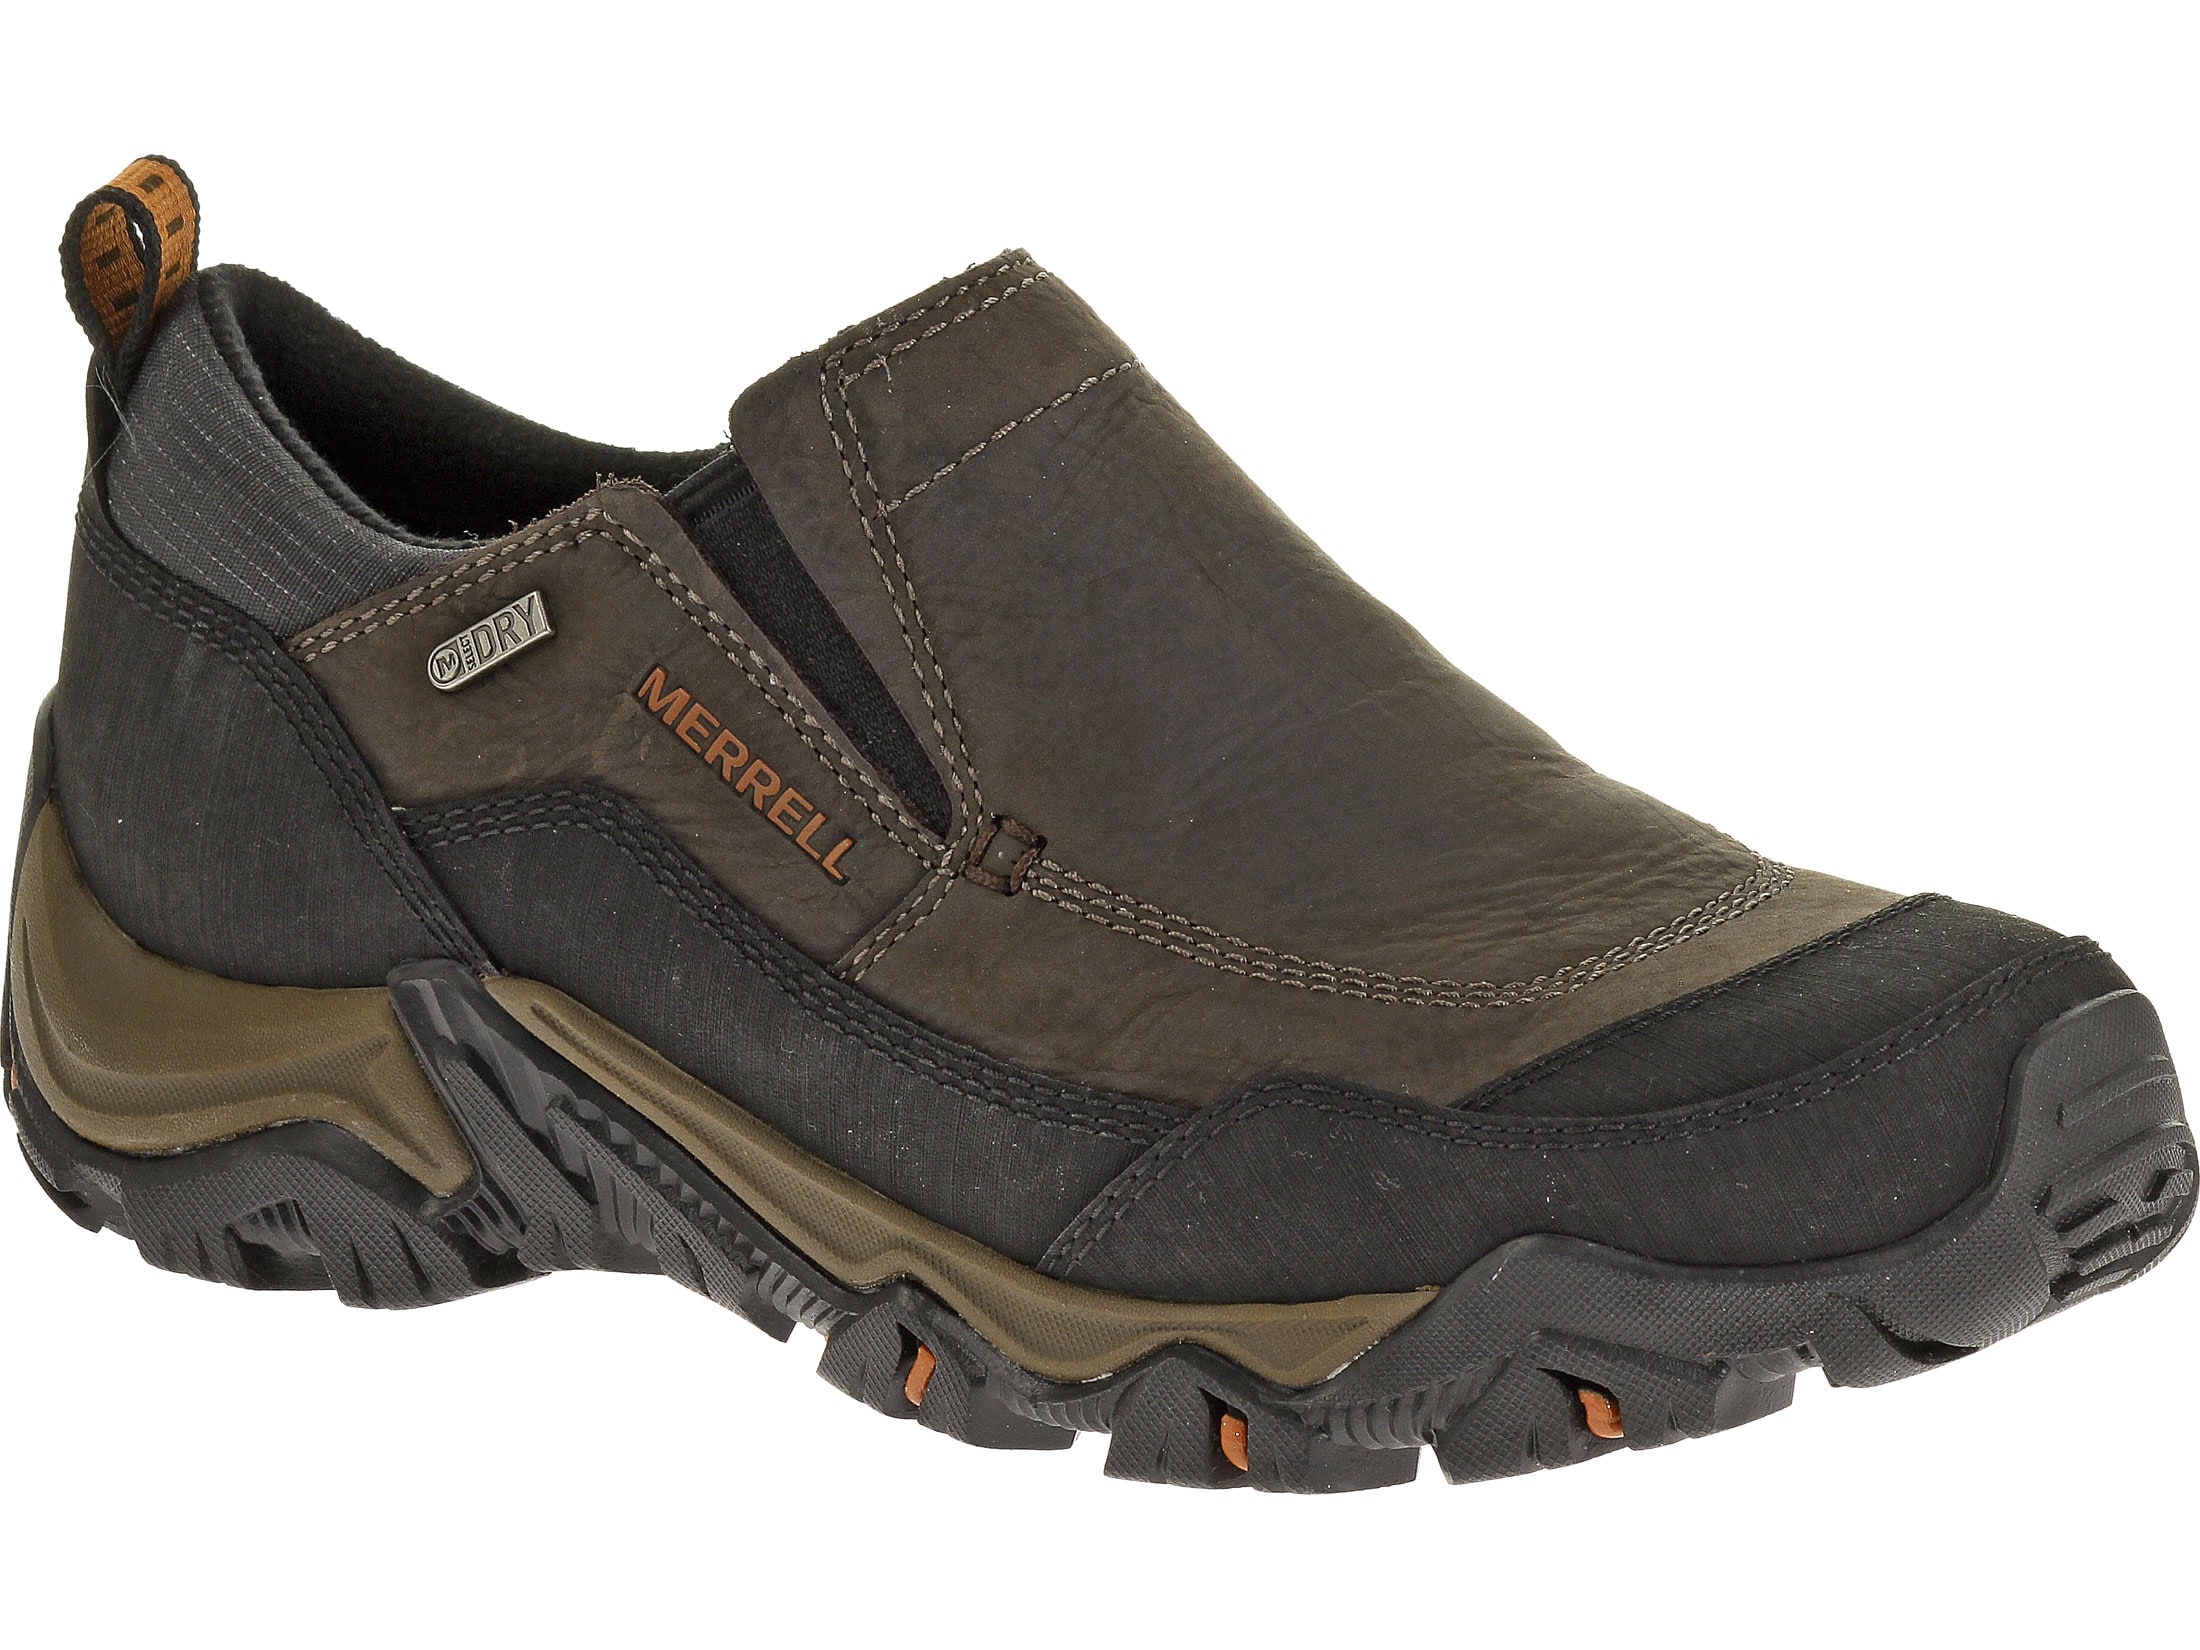 Merrell Polarand Rove Moc 4 Waterproof Hiking Shoes Leather Black